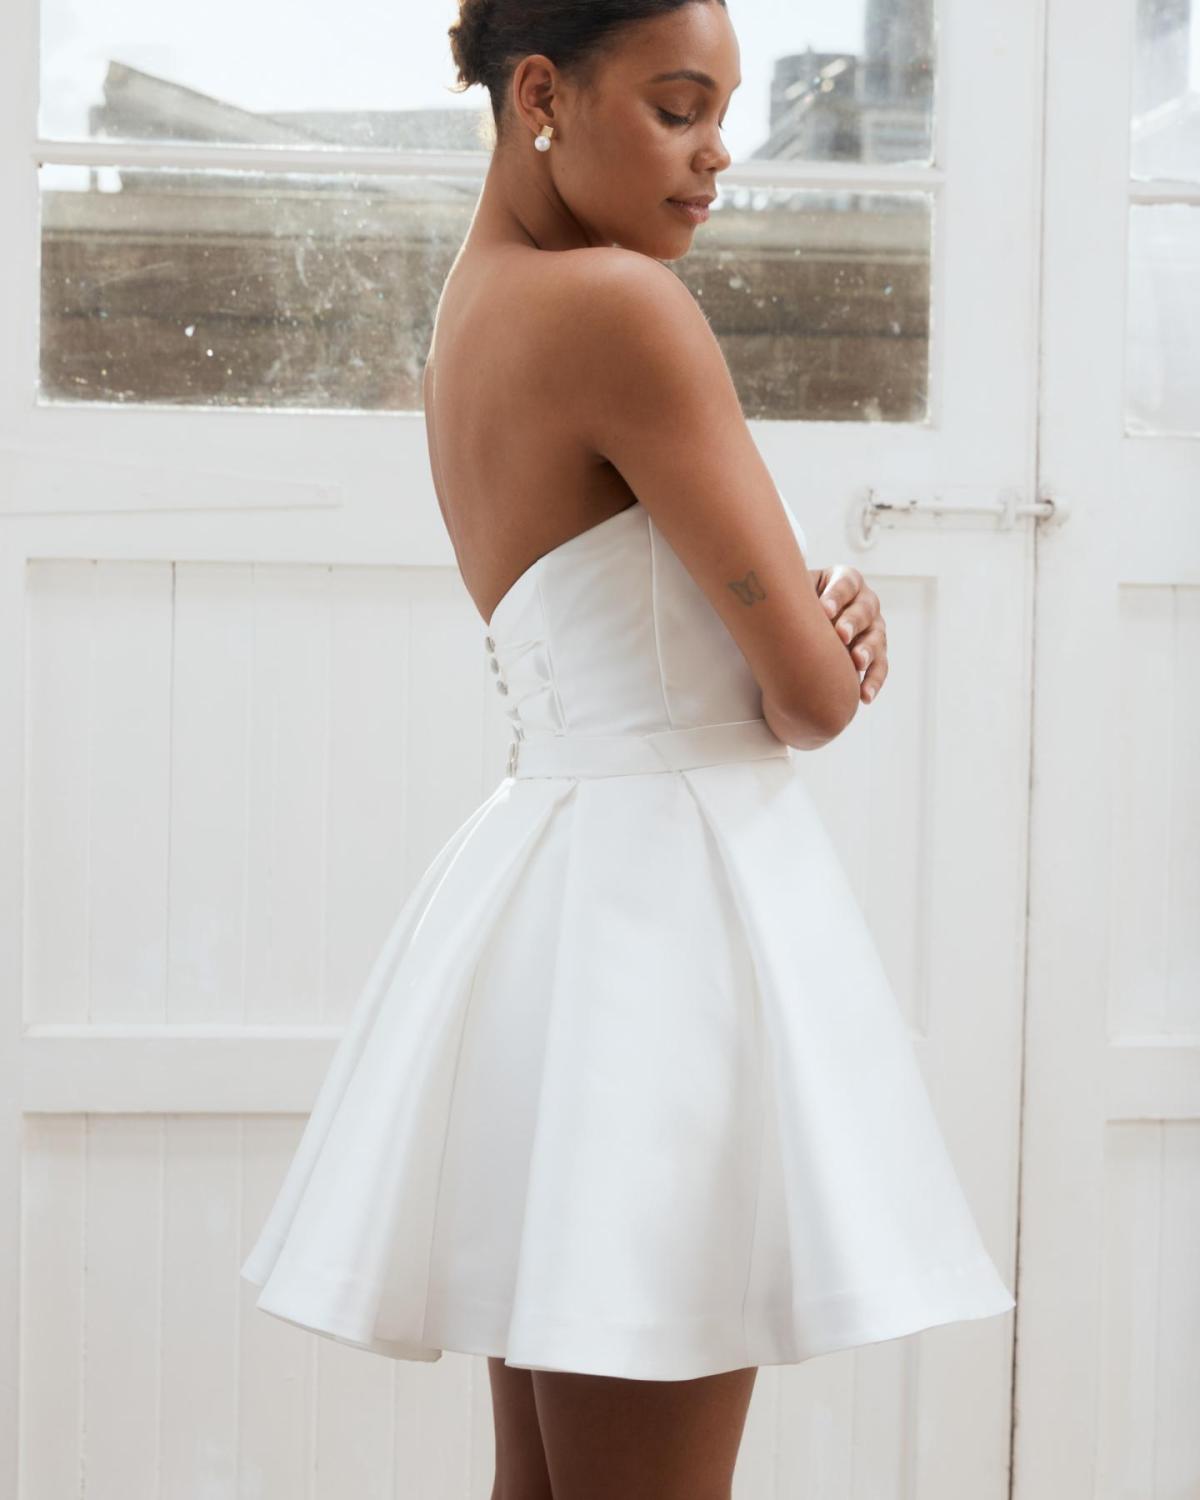 Jacqueline Elizabeth Mini Wedding dress by Karen Willis Holmes, A-line short dresses